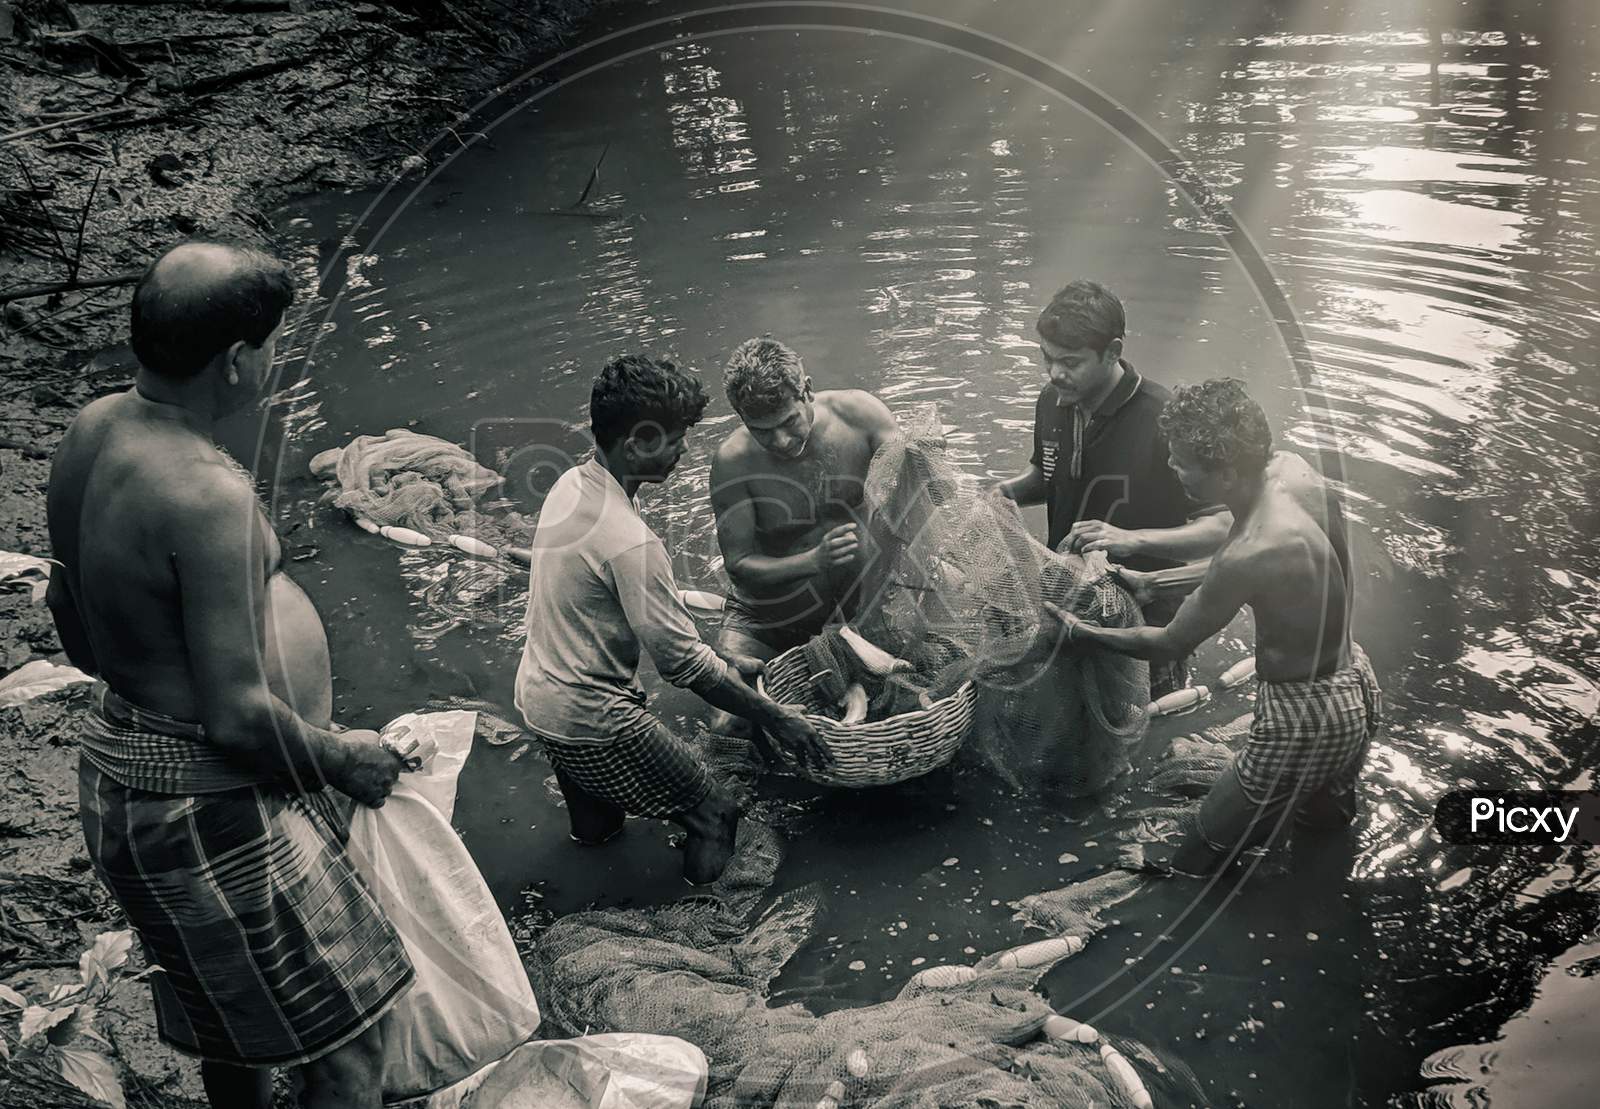 Fishermen in Covid times